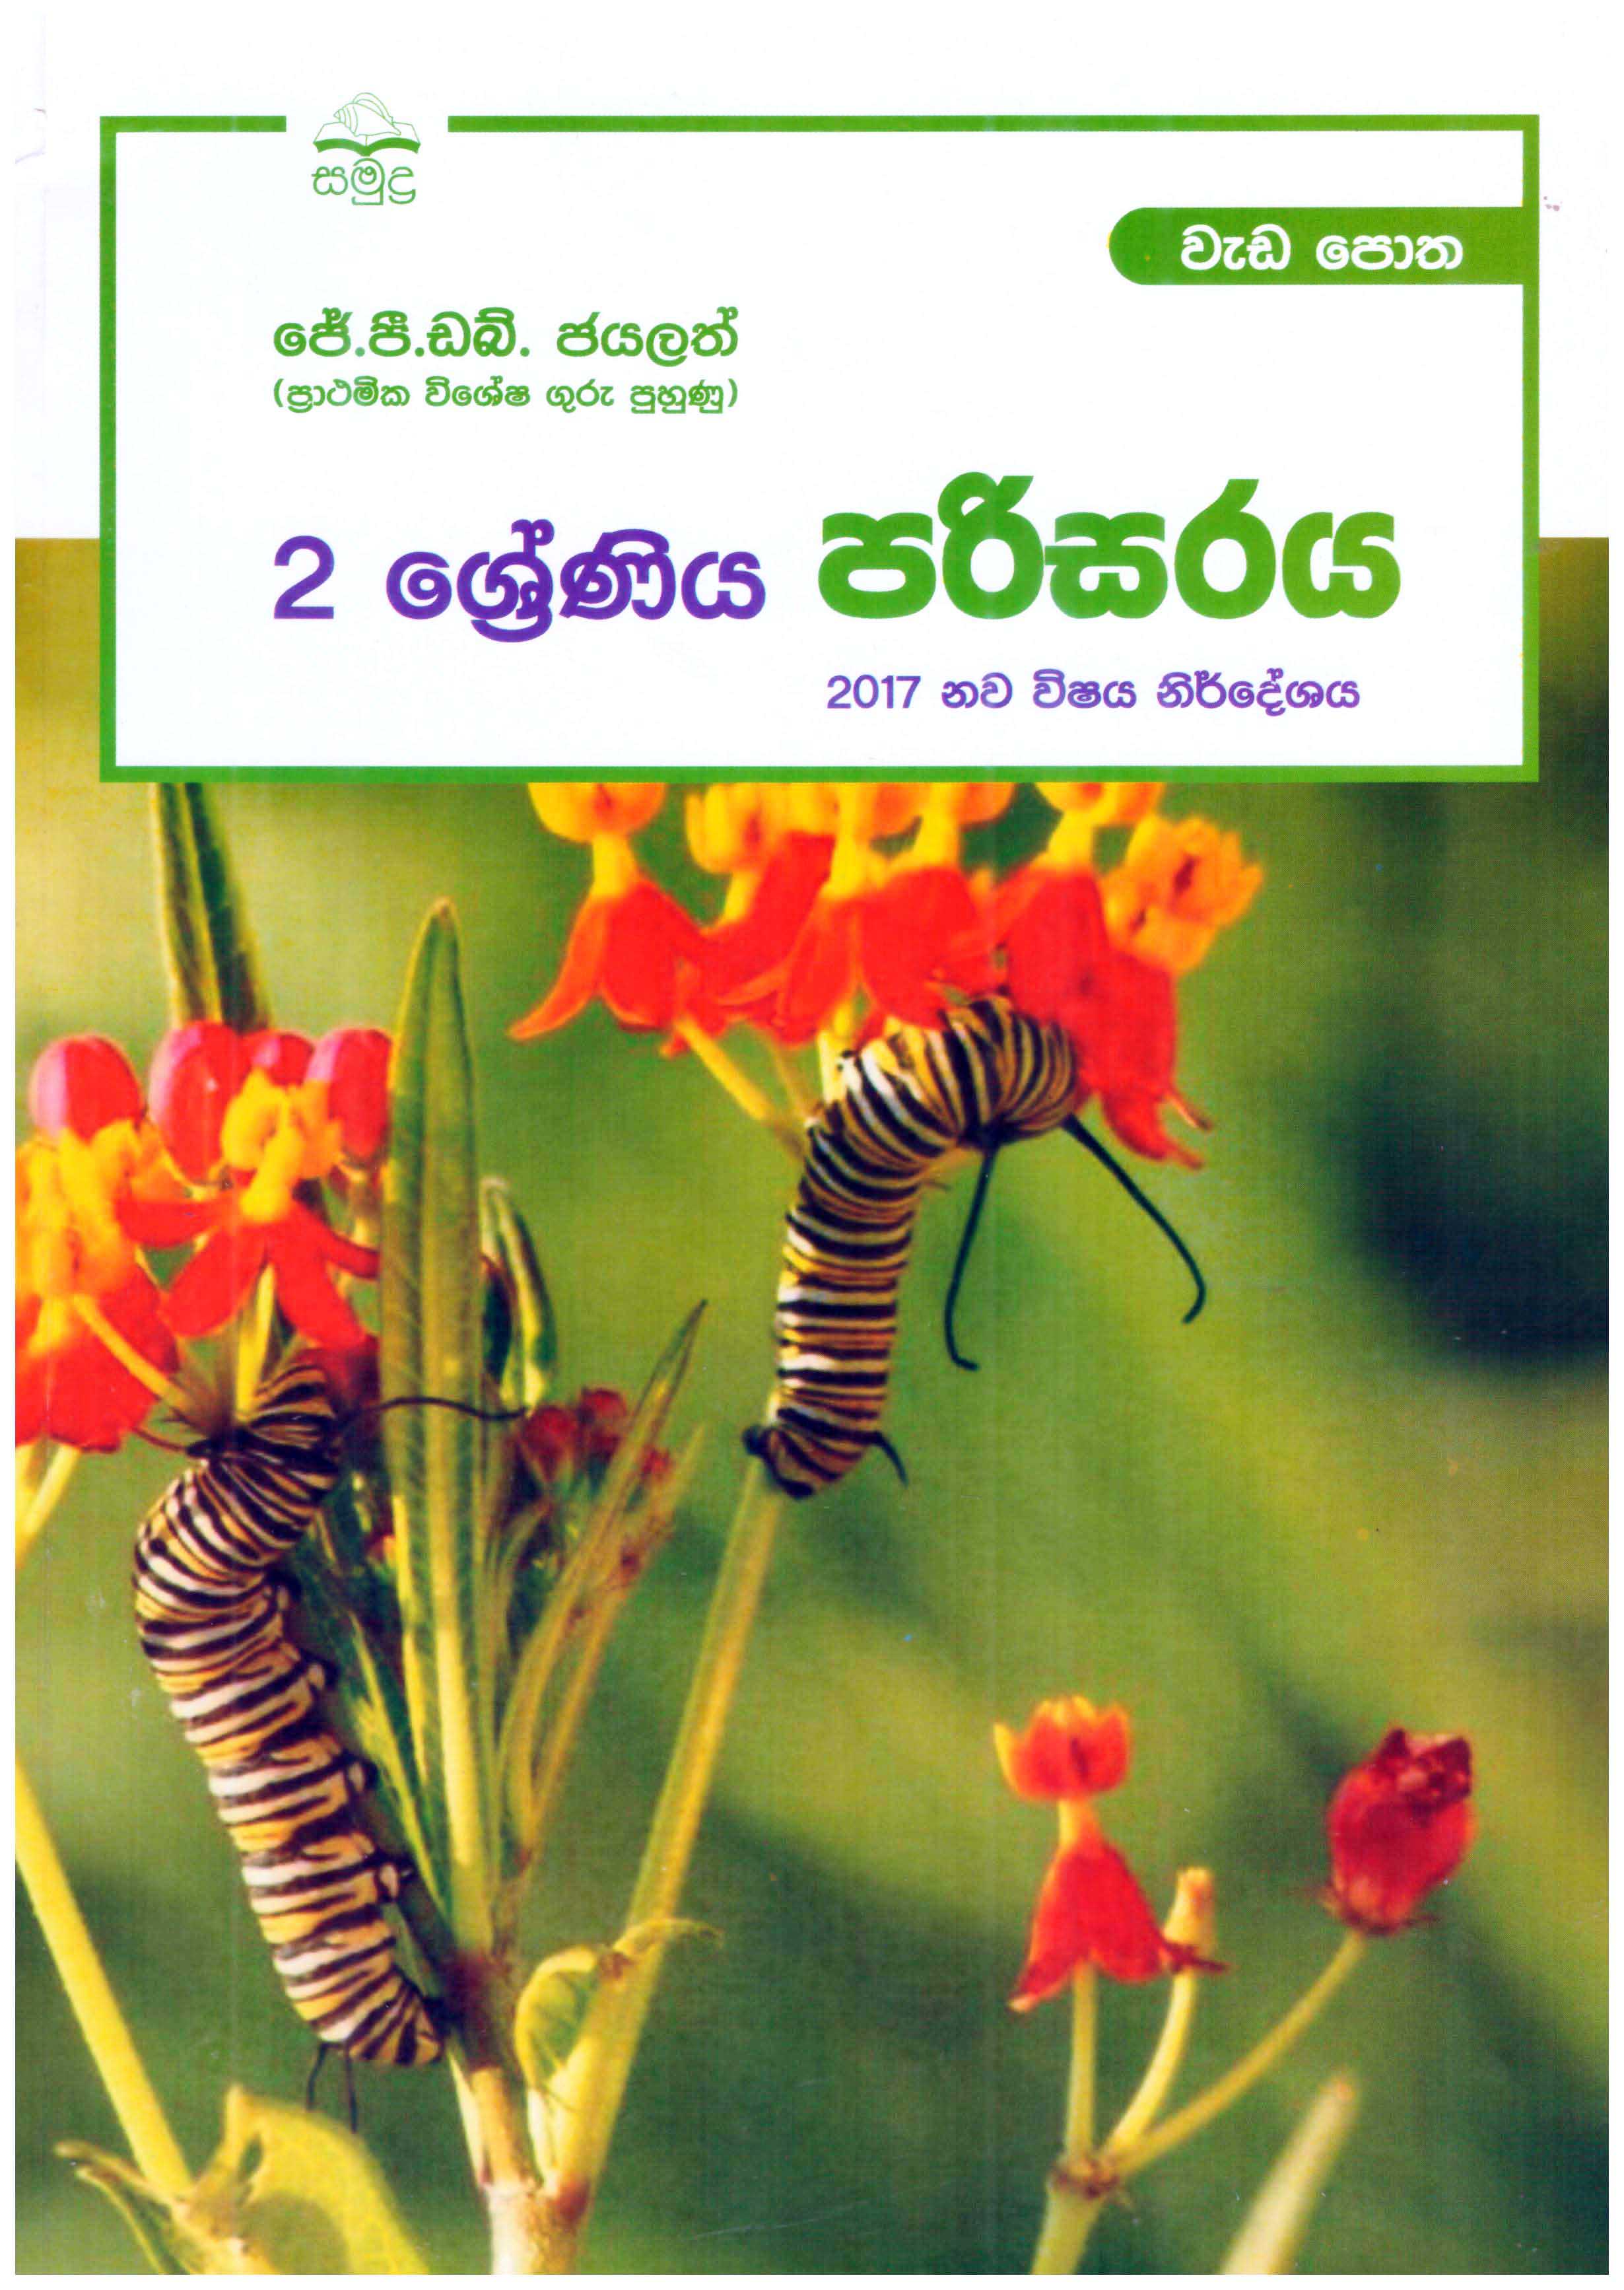 Samudra Grade 2 Parisaraya wada potha (2017 new syllabus)